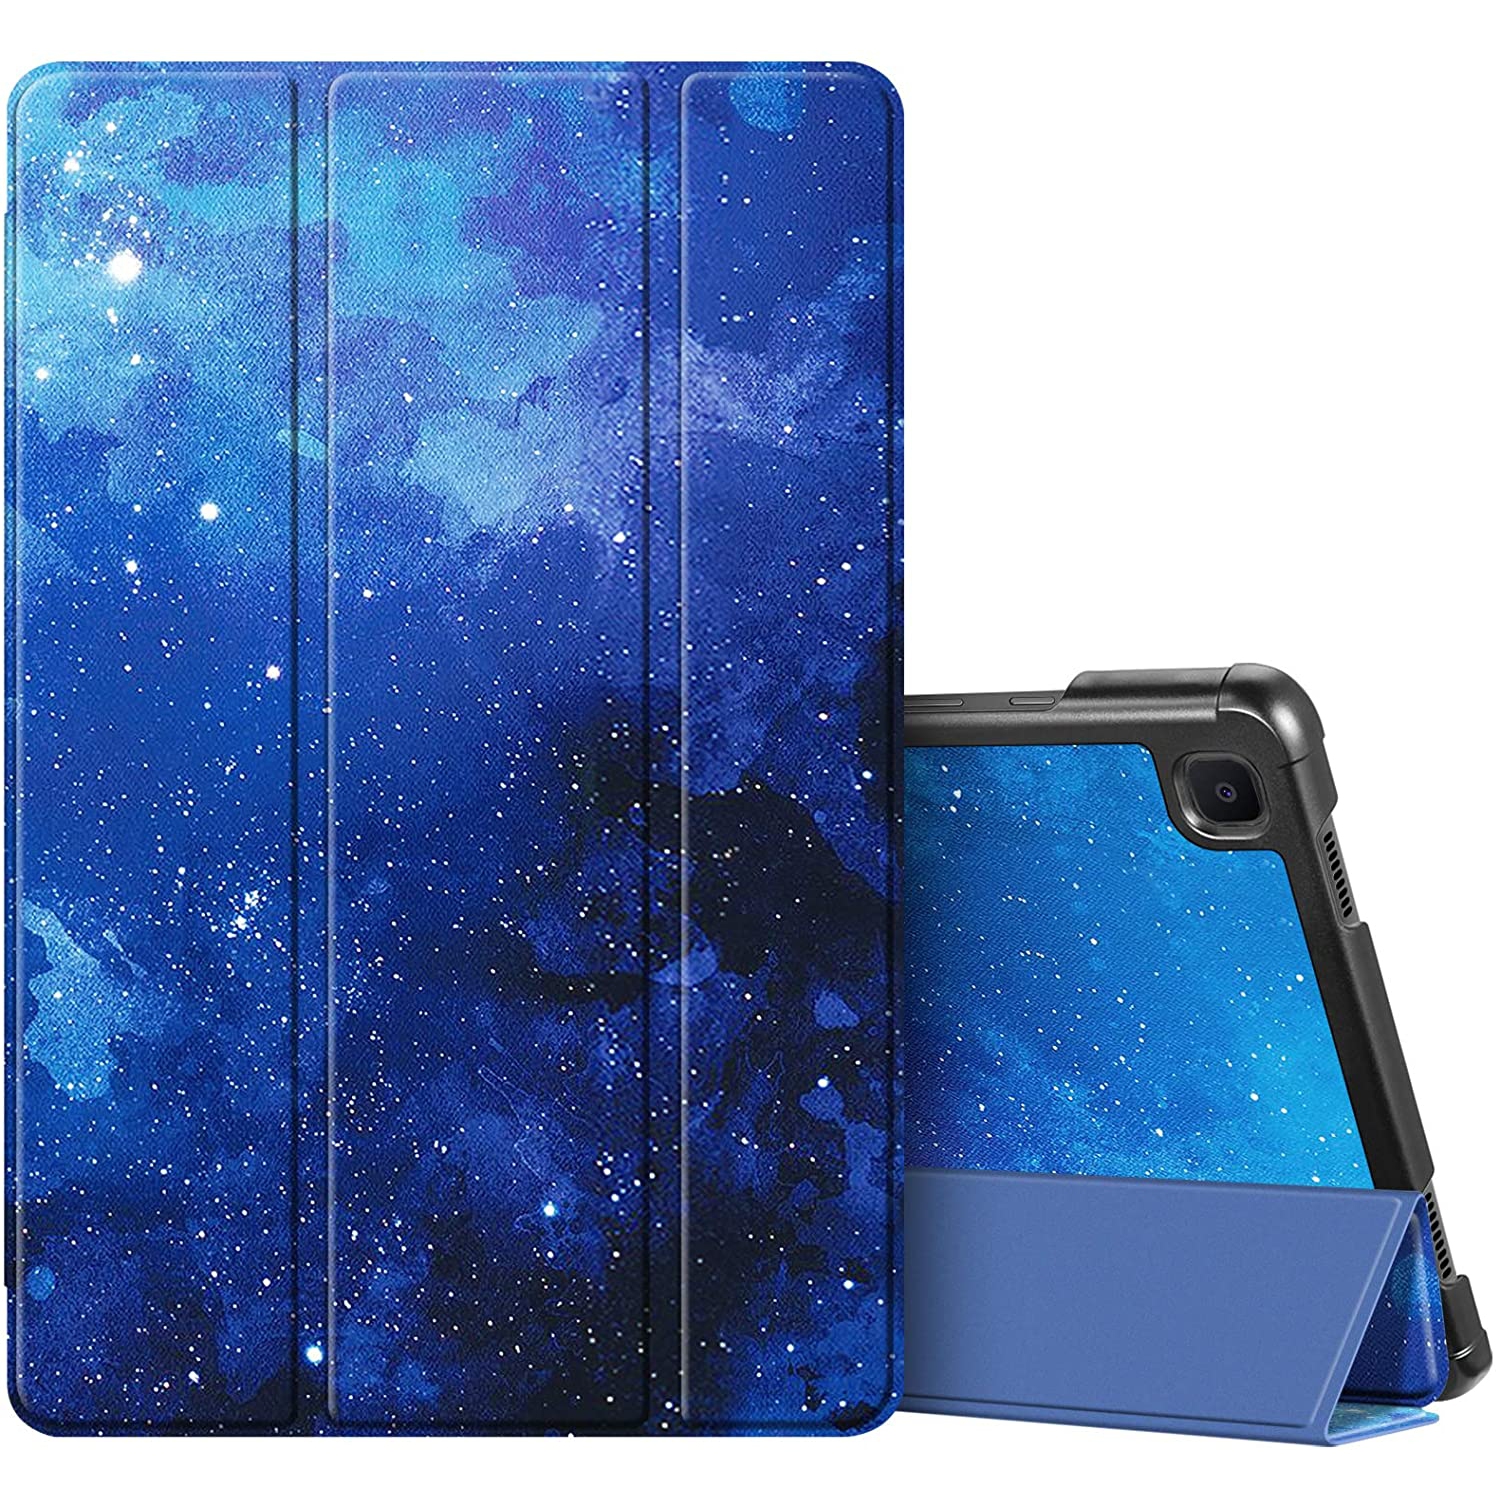 Slim Case for Samsung Galaxy Tab A7 10.4 inch 2020 Model (SM-T500/T505/T507), Ultra Lightweight Tri-Fold Stand